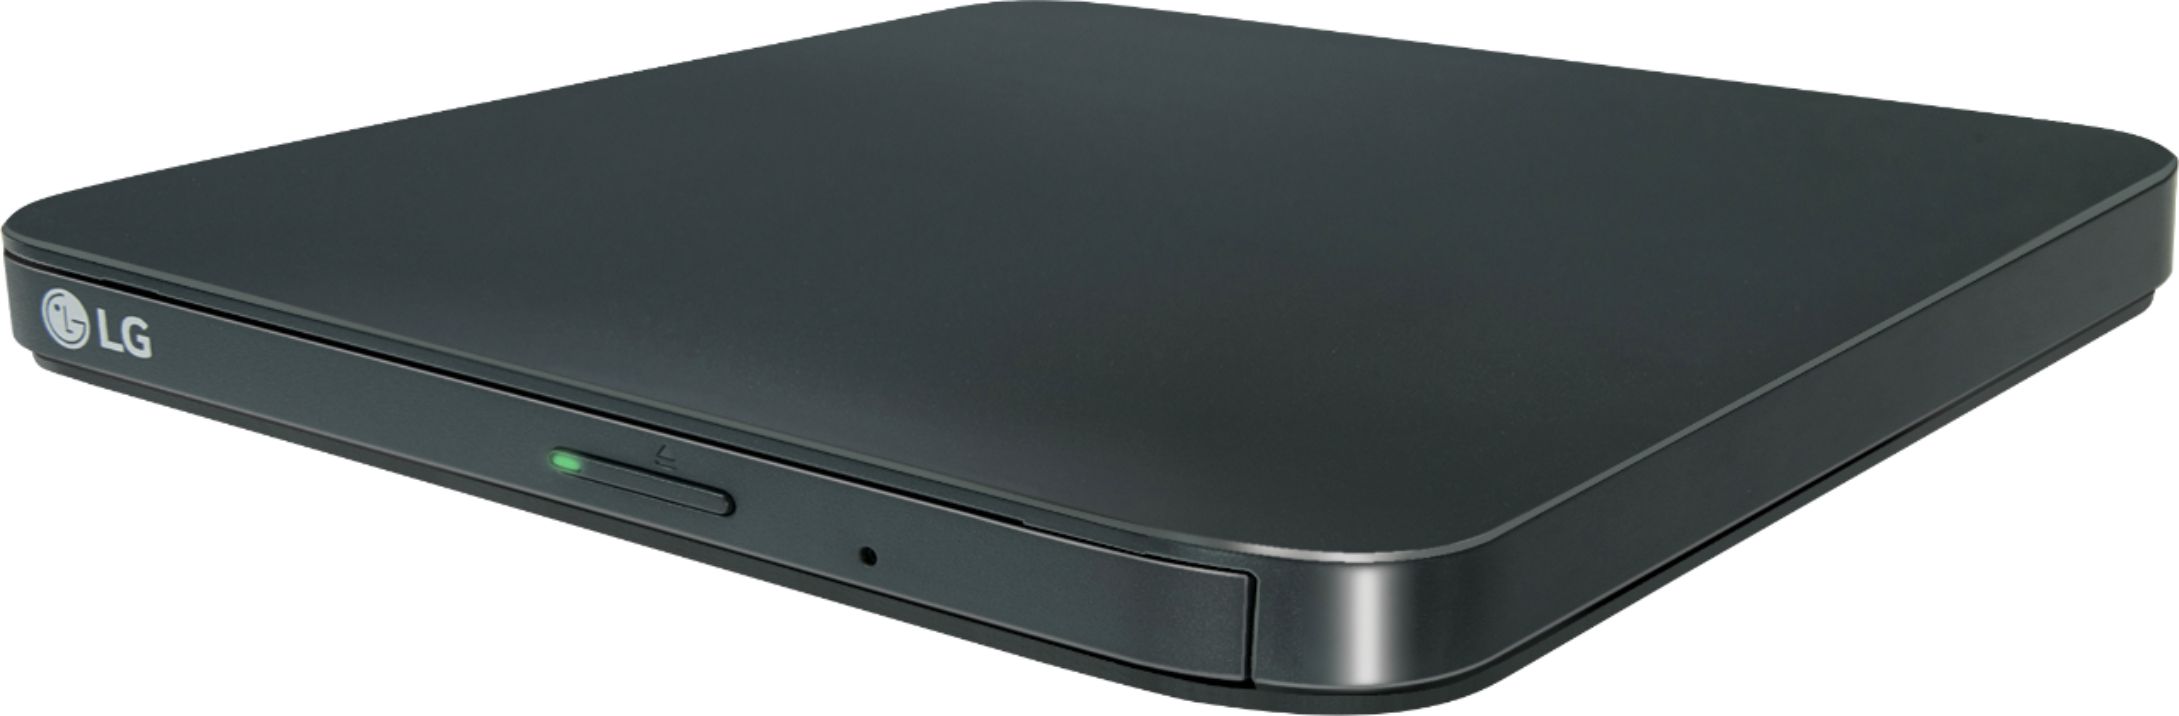 LG 8x External Double-Layer DVD±RW/CD-RW Drive SP80NB80 - Buy